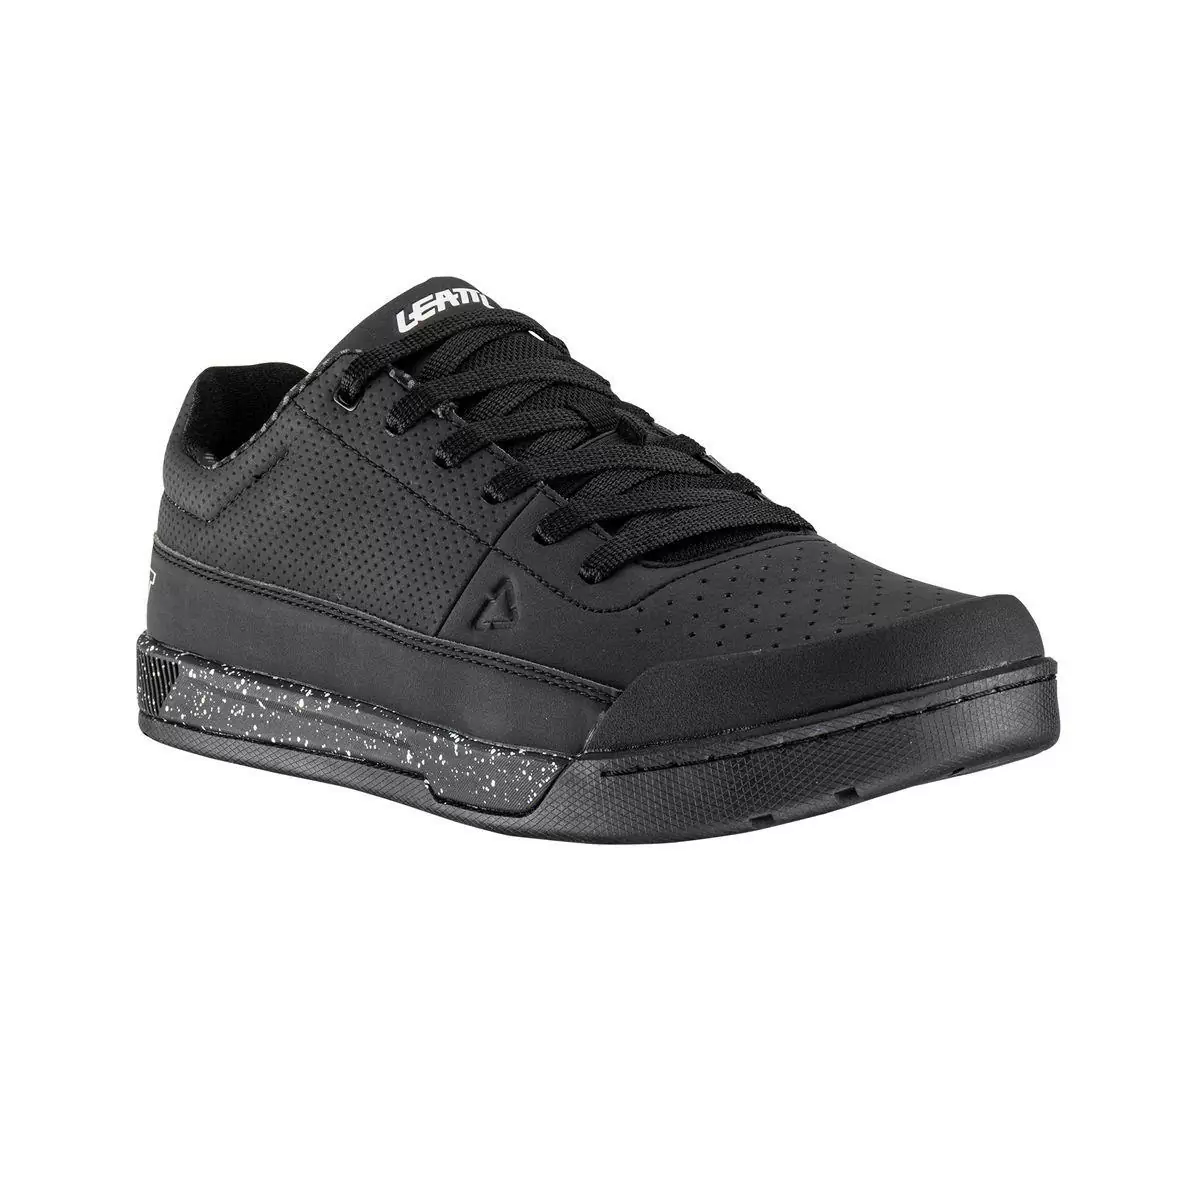 Mtb Shoes 2.0 Flat Black Size 48.5 #1